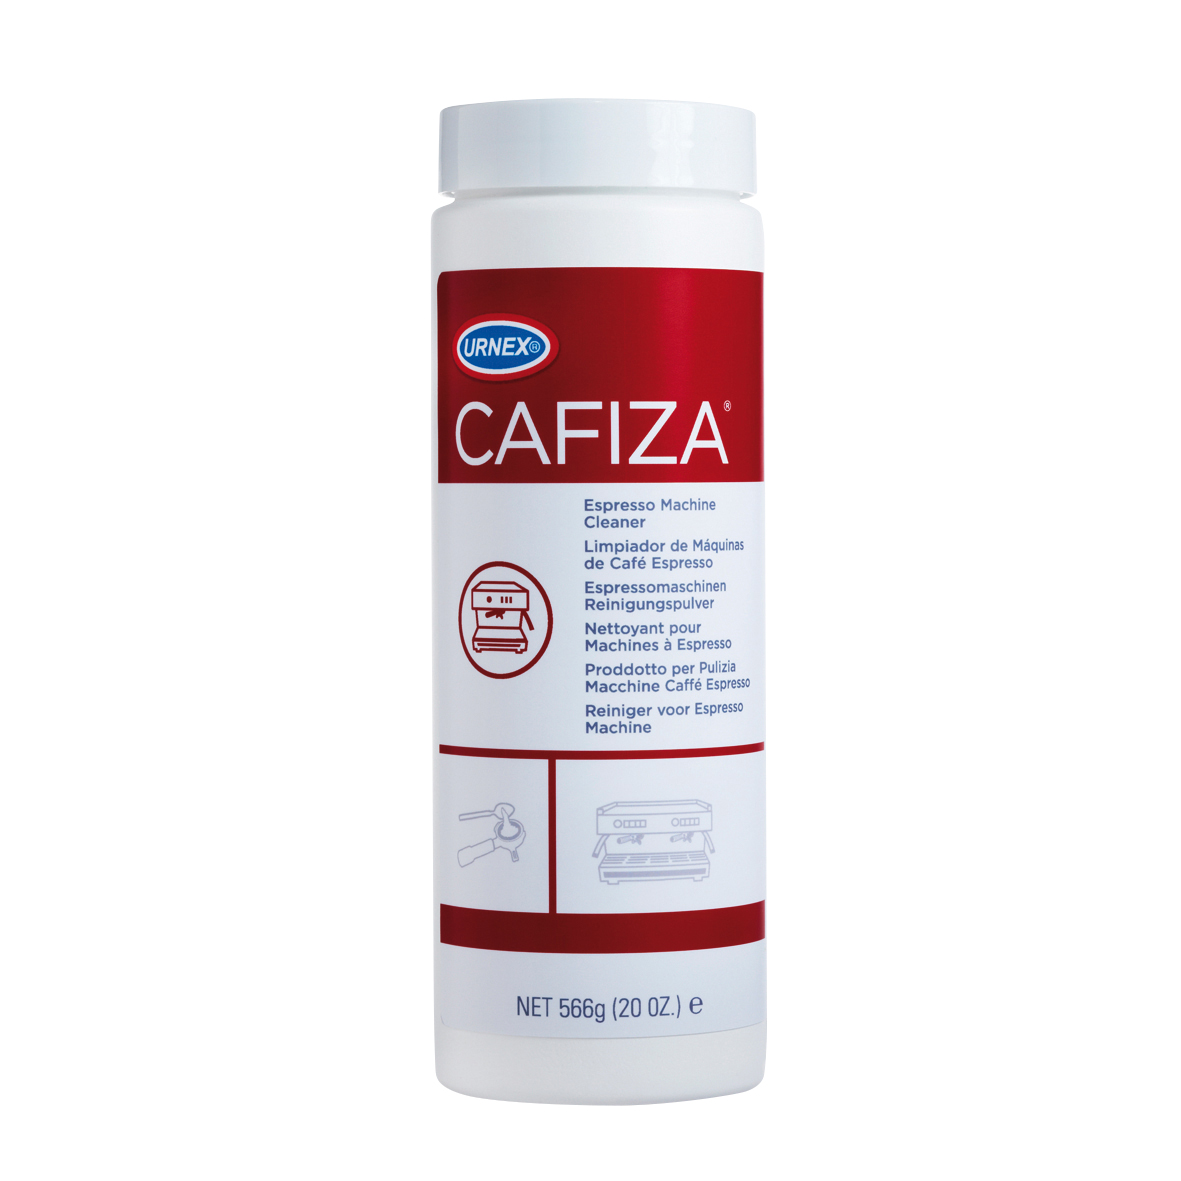 Cafiza Premium Cleaning Powder